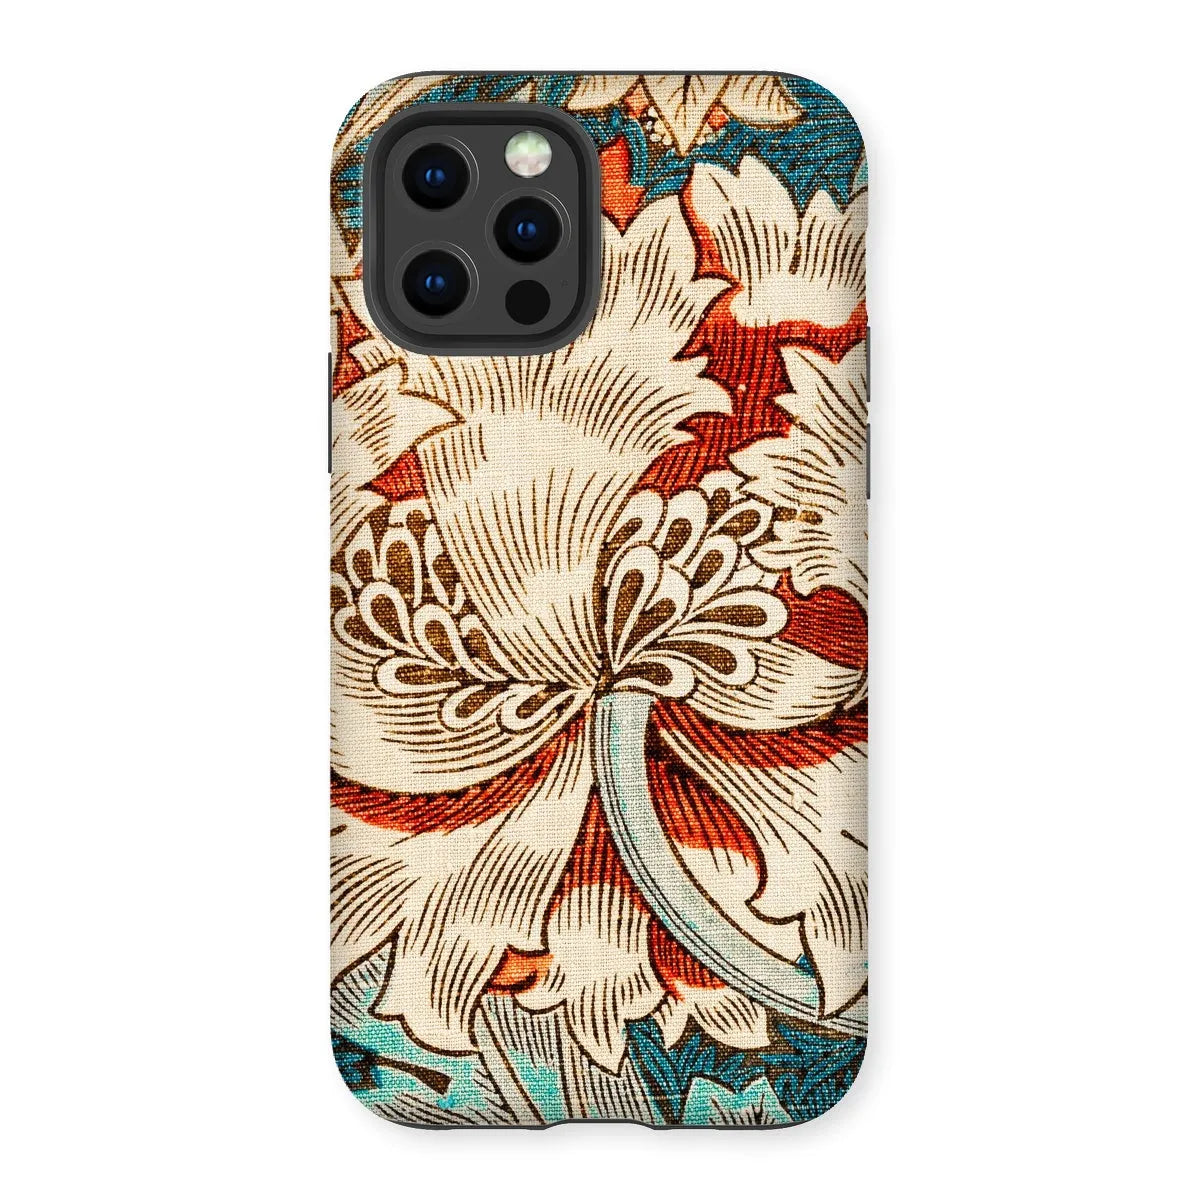 Honeysuckle Too By William Morris Phone Case - Iphone 12 Pro / Matte - Mobile Phone Cases - Aesthetic Art